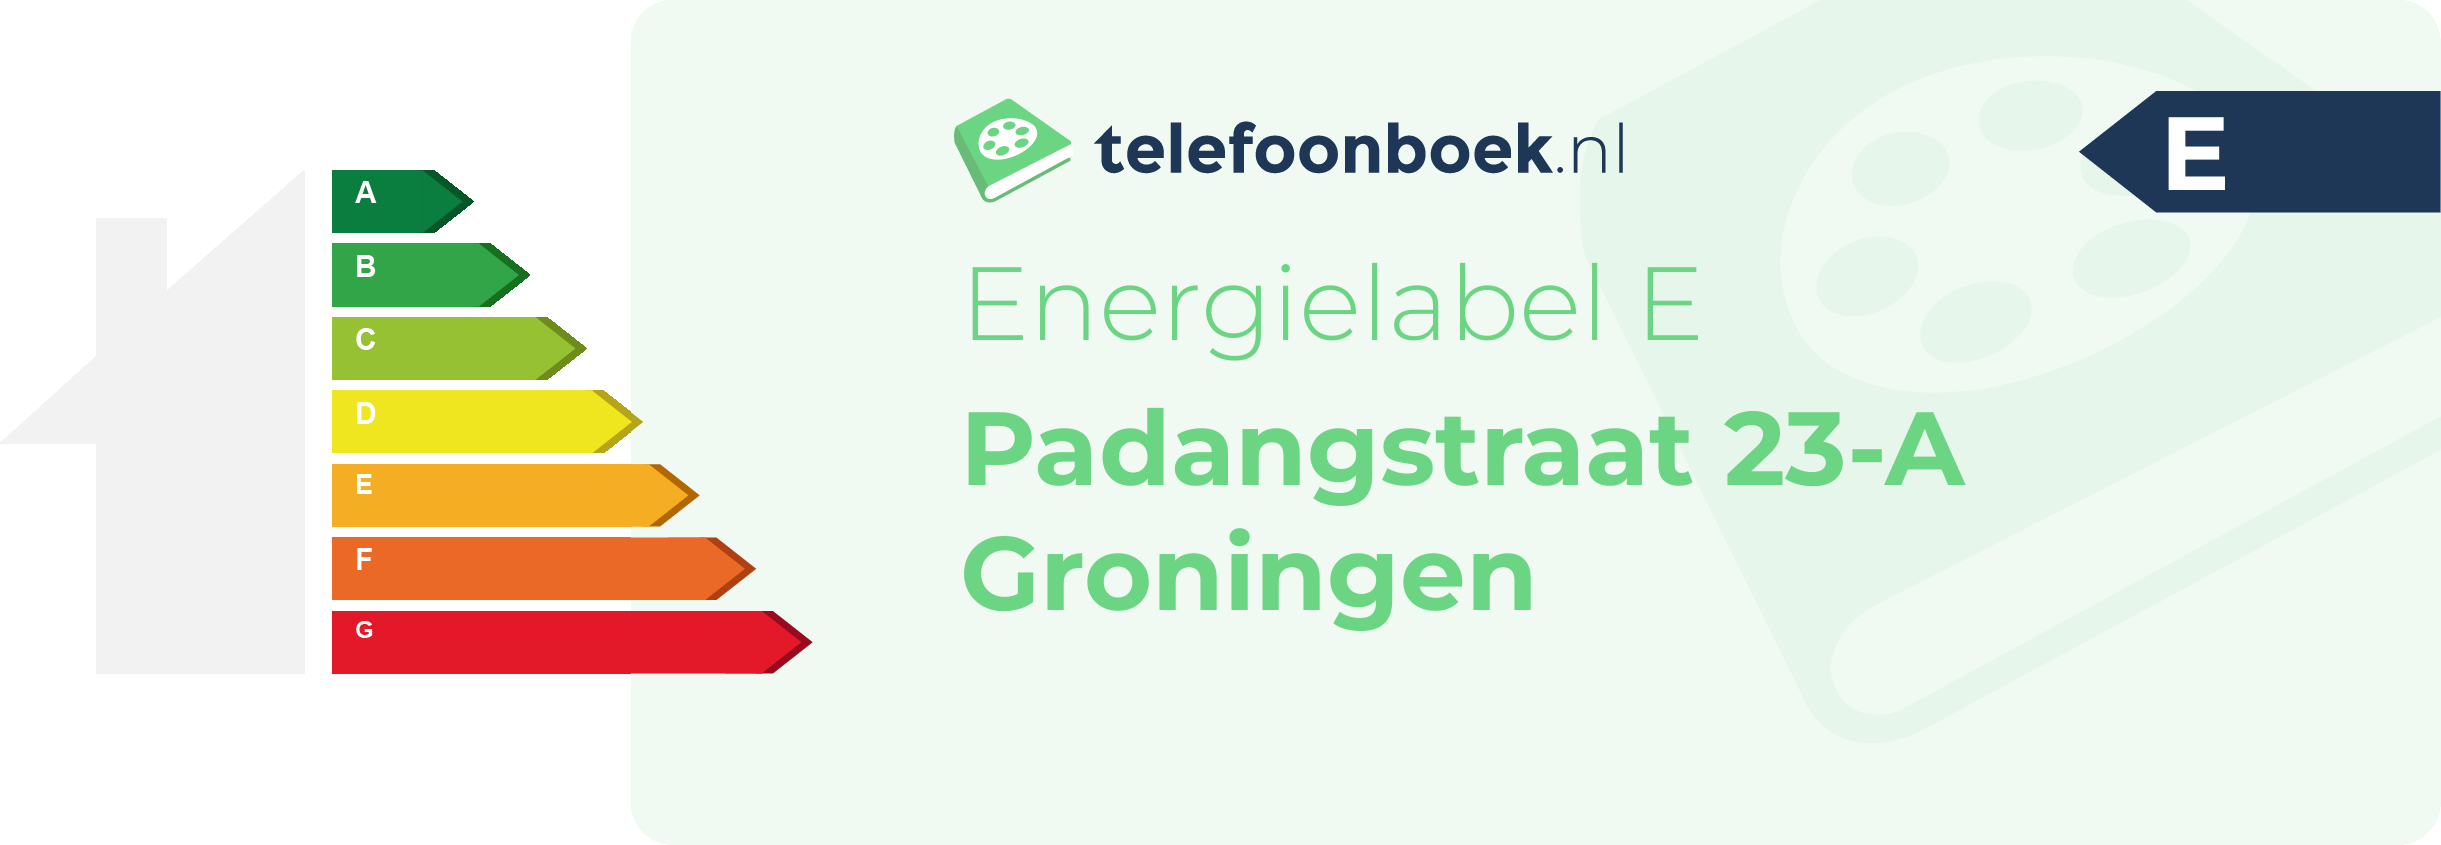 Energielabel Padangstraat 23-A Groningen